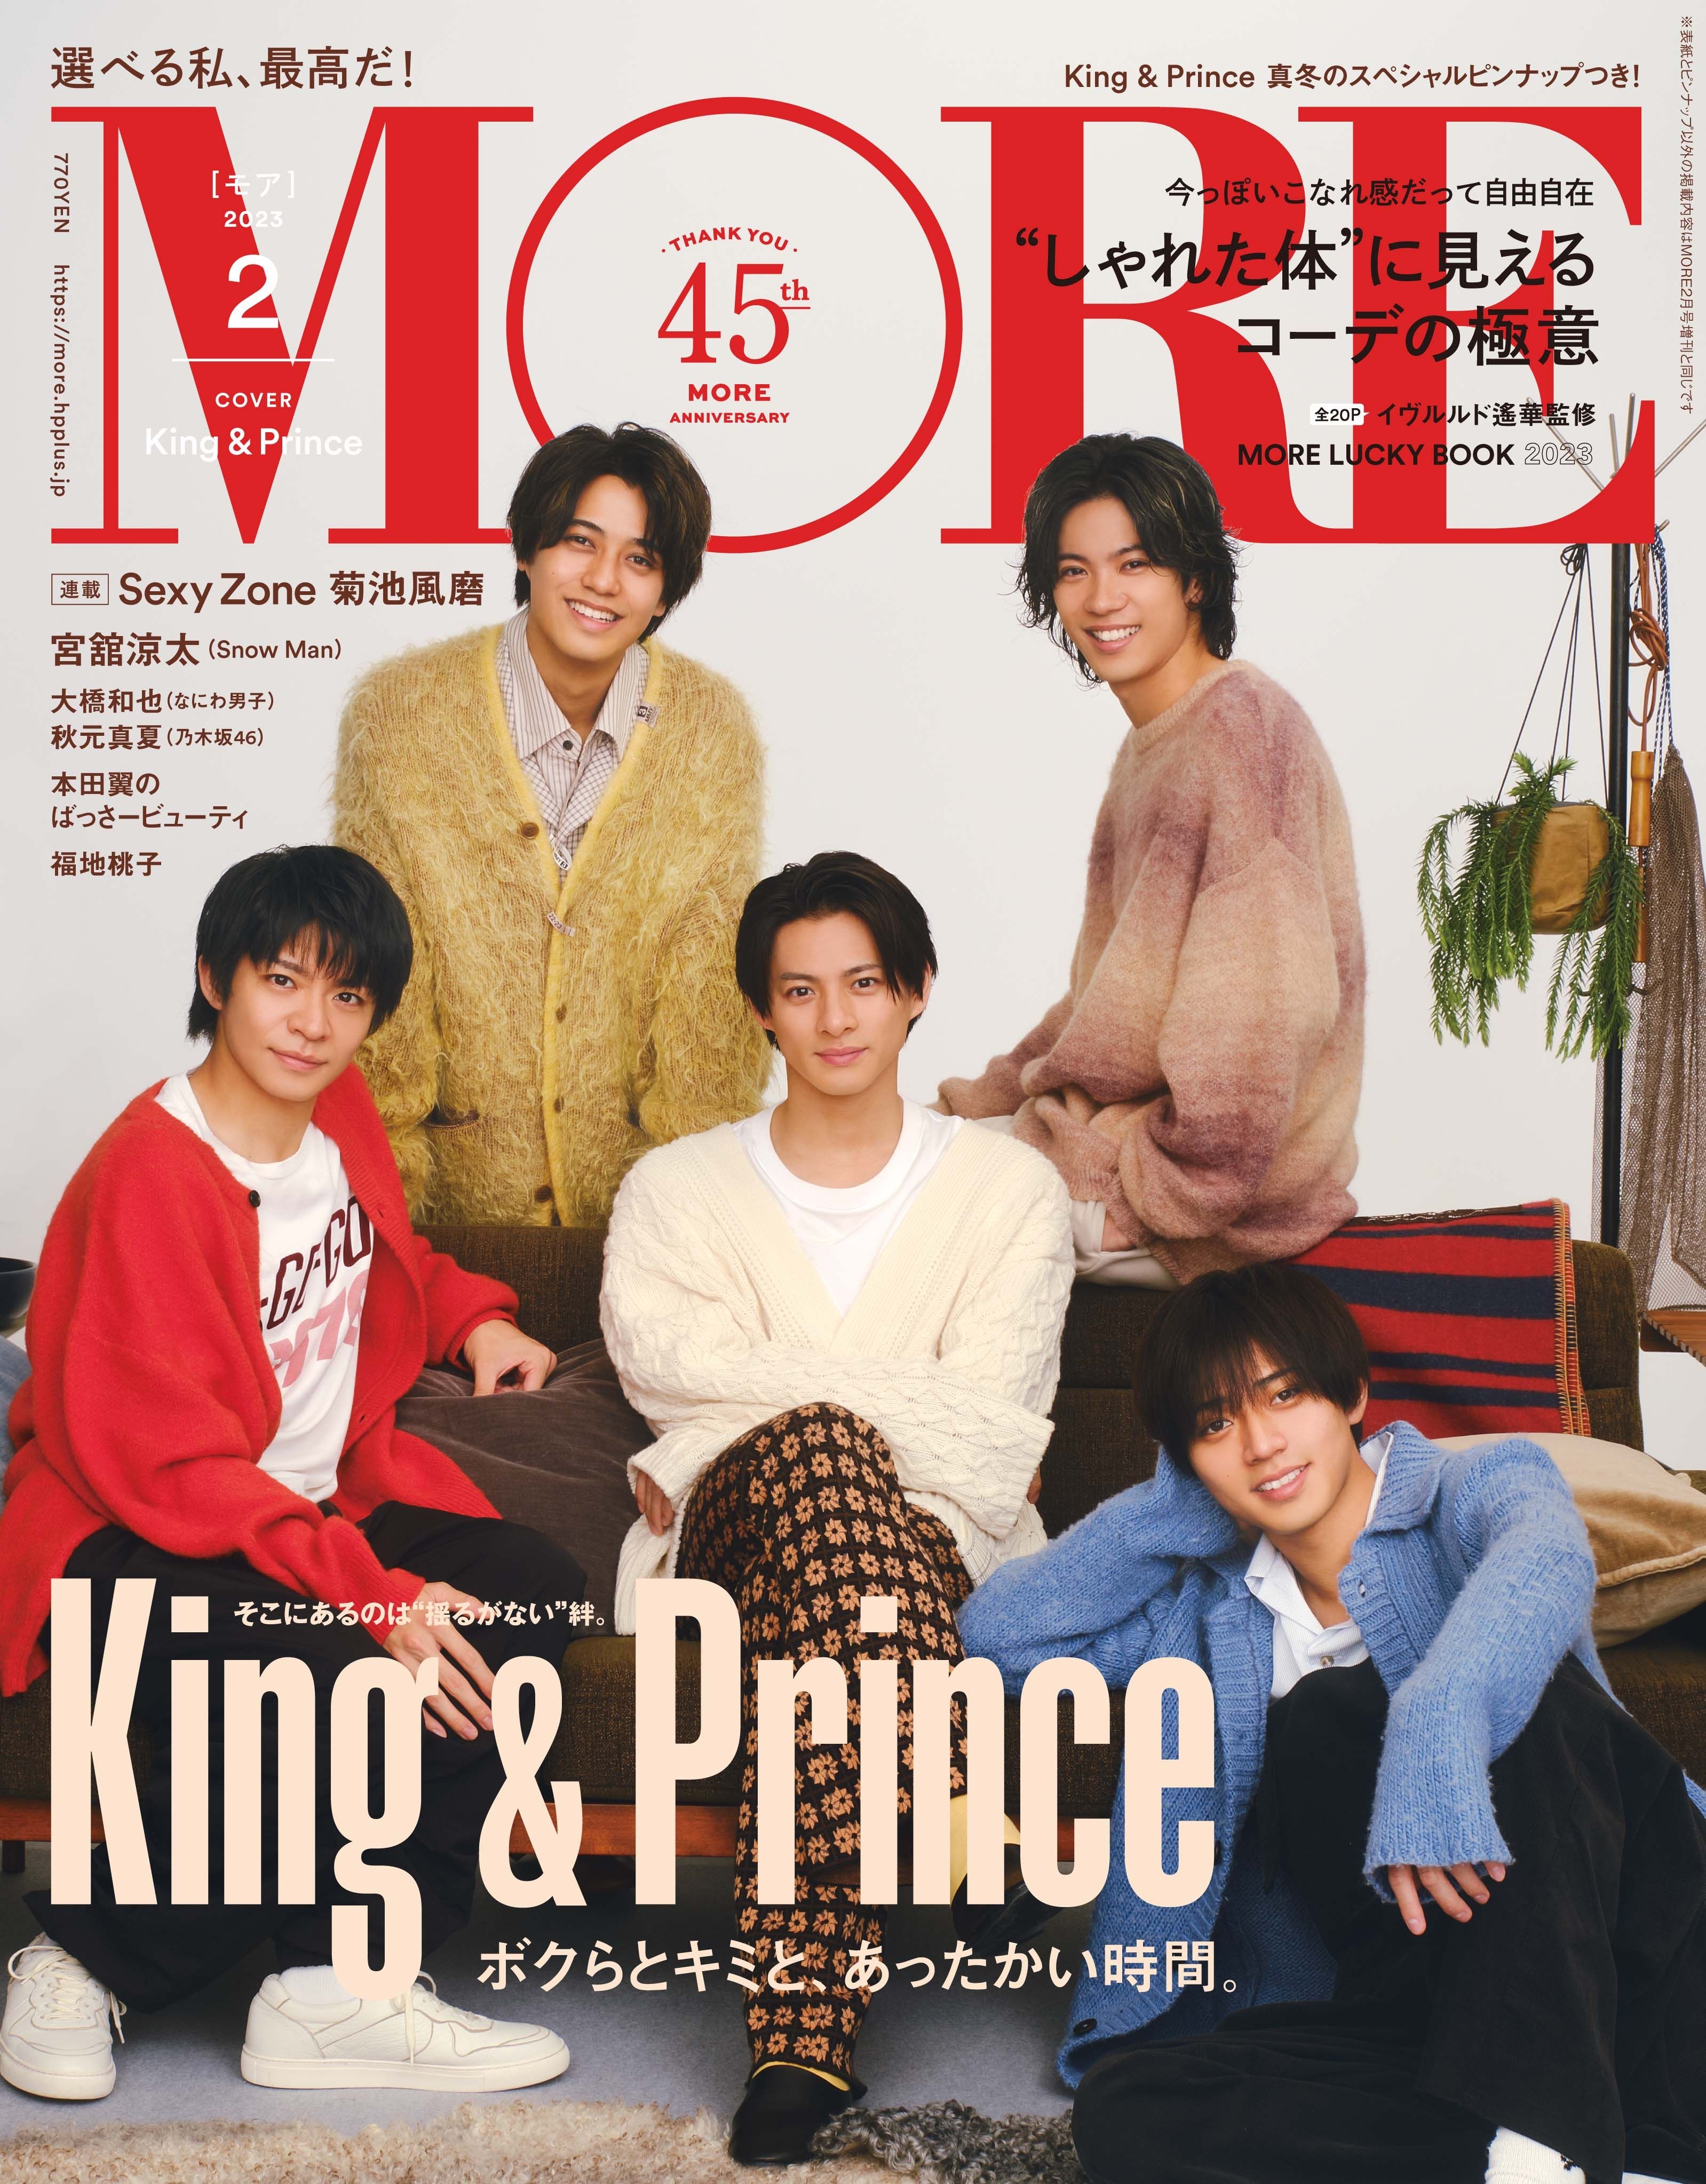 King Prince anan 50周年特別号 キンプリ 2冊セット - 男性アイドル